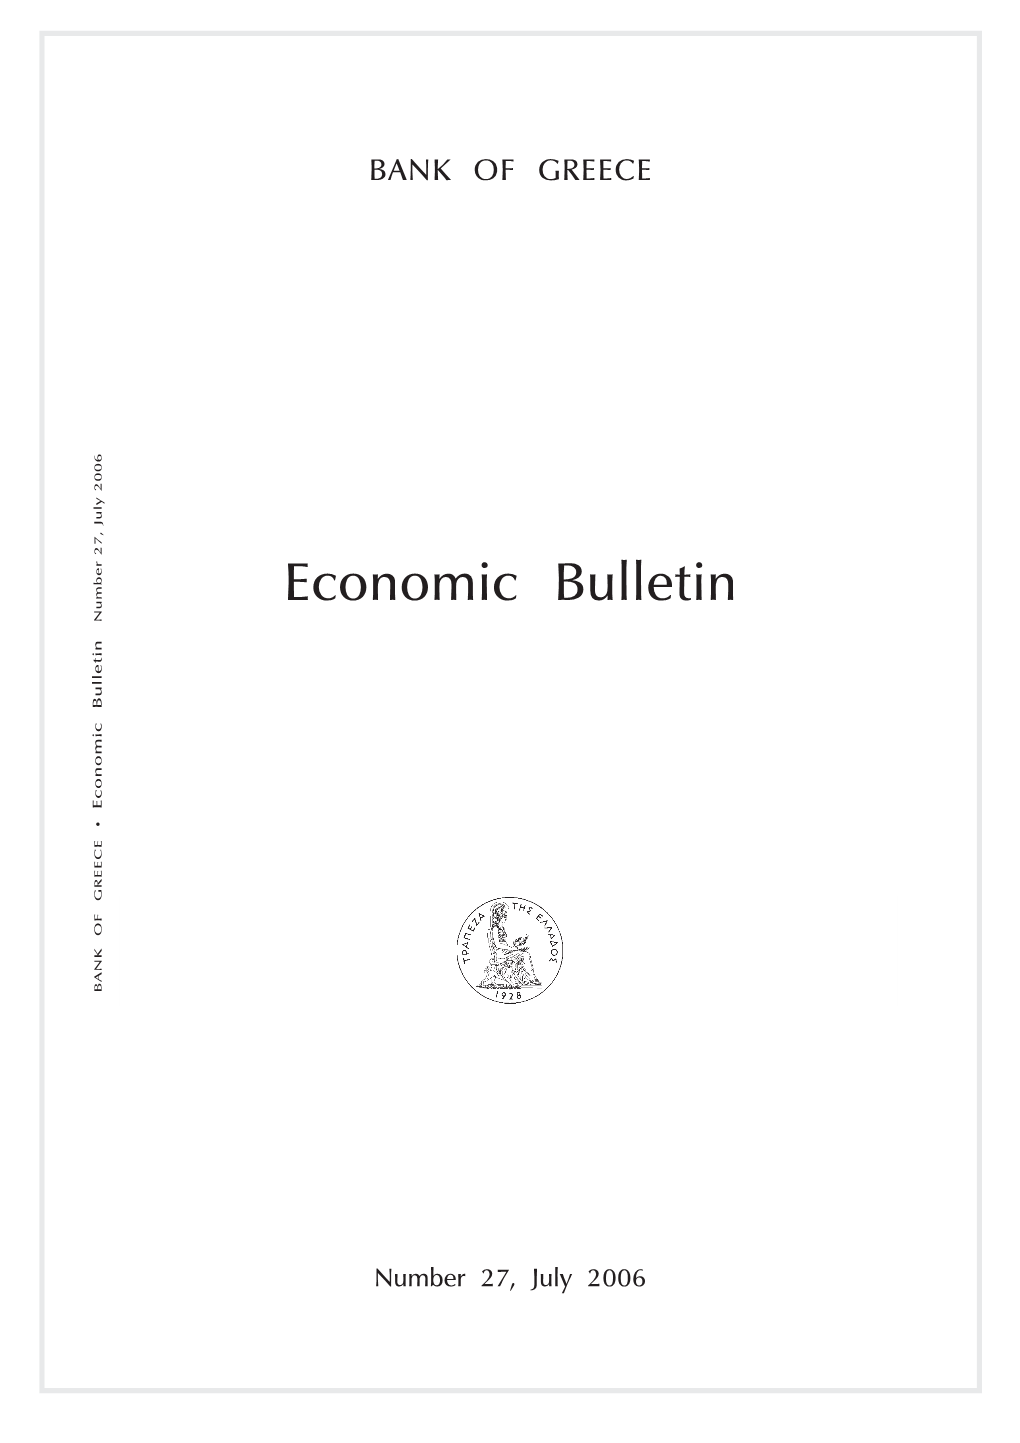 Economic Bulletin Number 27, July 2006 Economic Bulletin Economic BANK of GREECE of BANK Number 27, July July 27, Number 2006